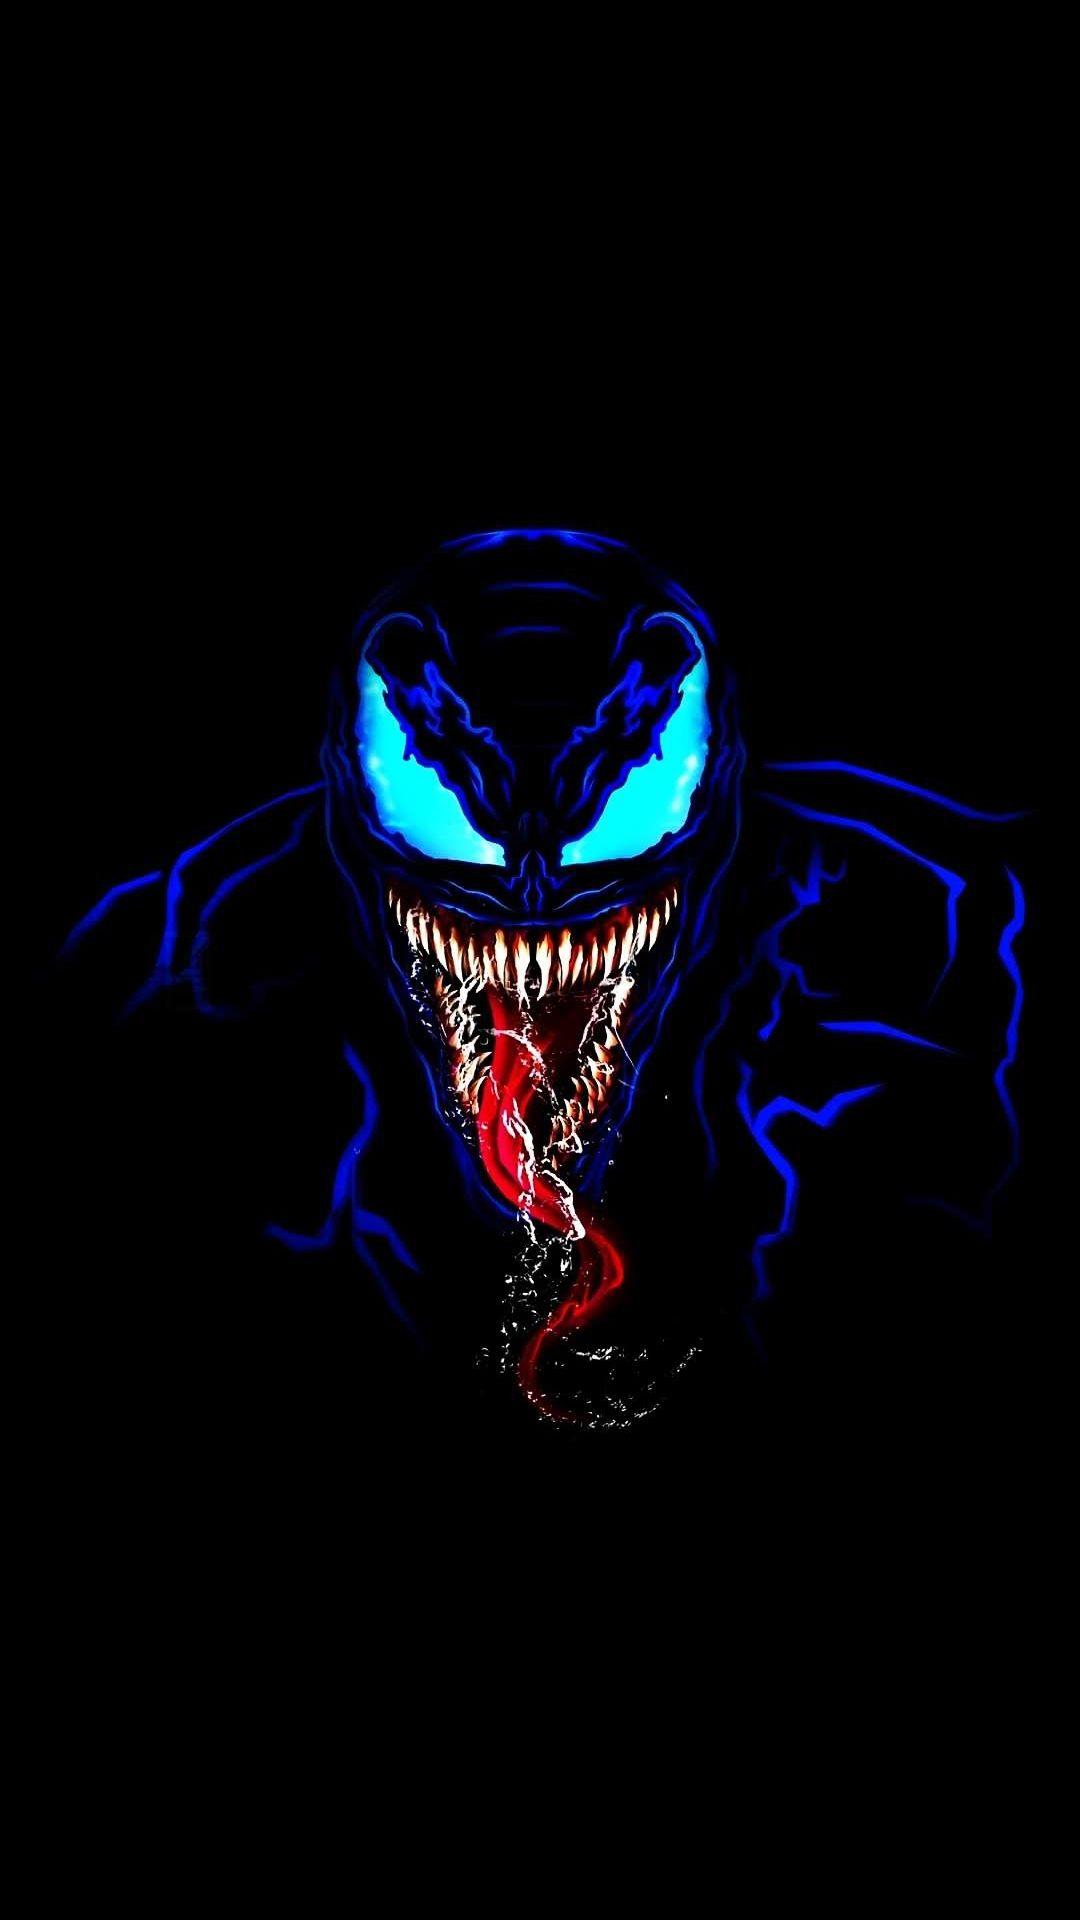 Venom in Dark iPhone Wallpaper. Marvel artwork